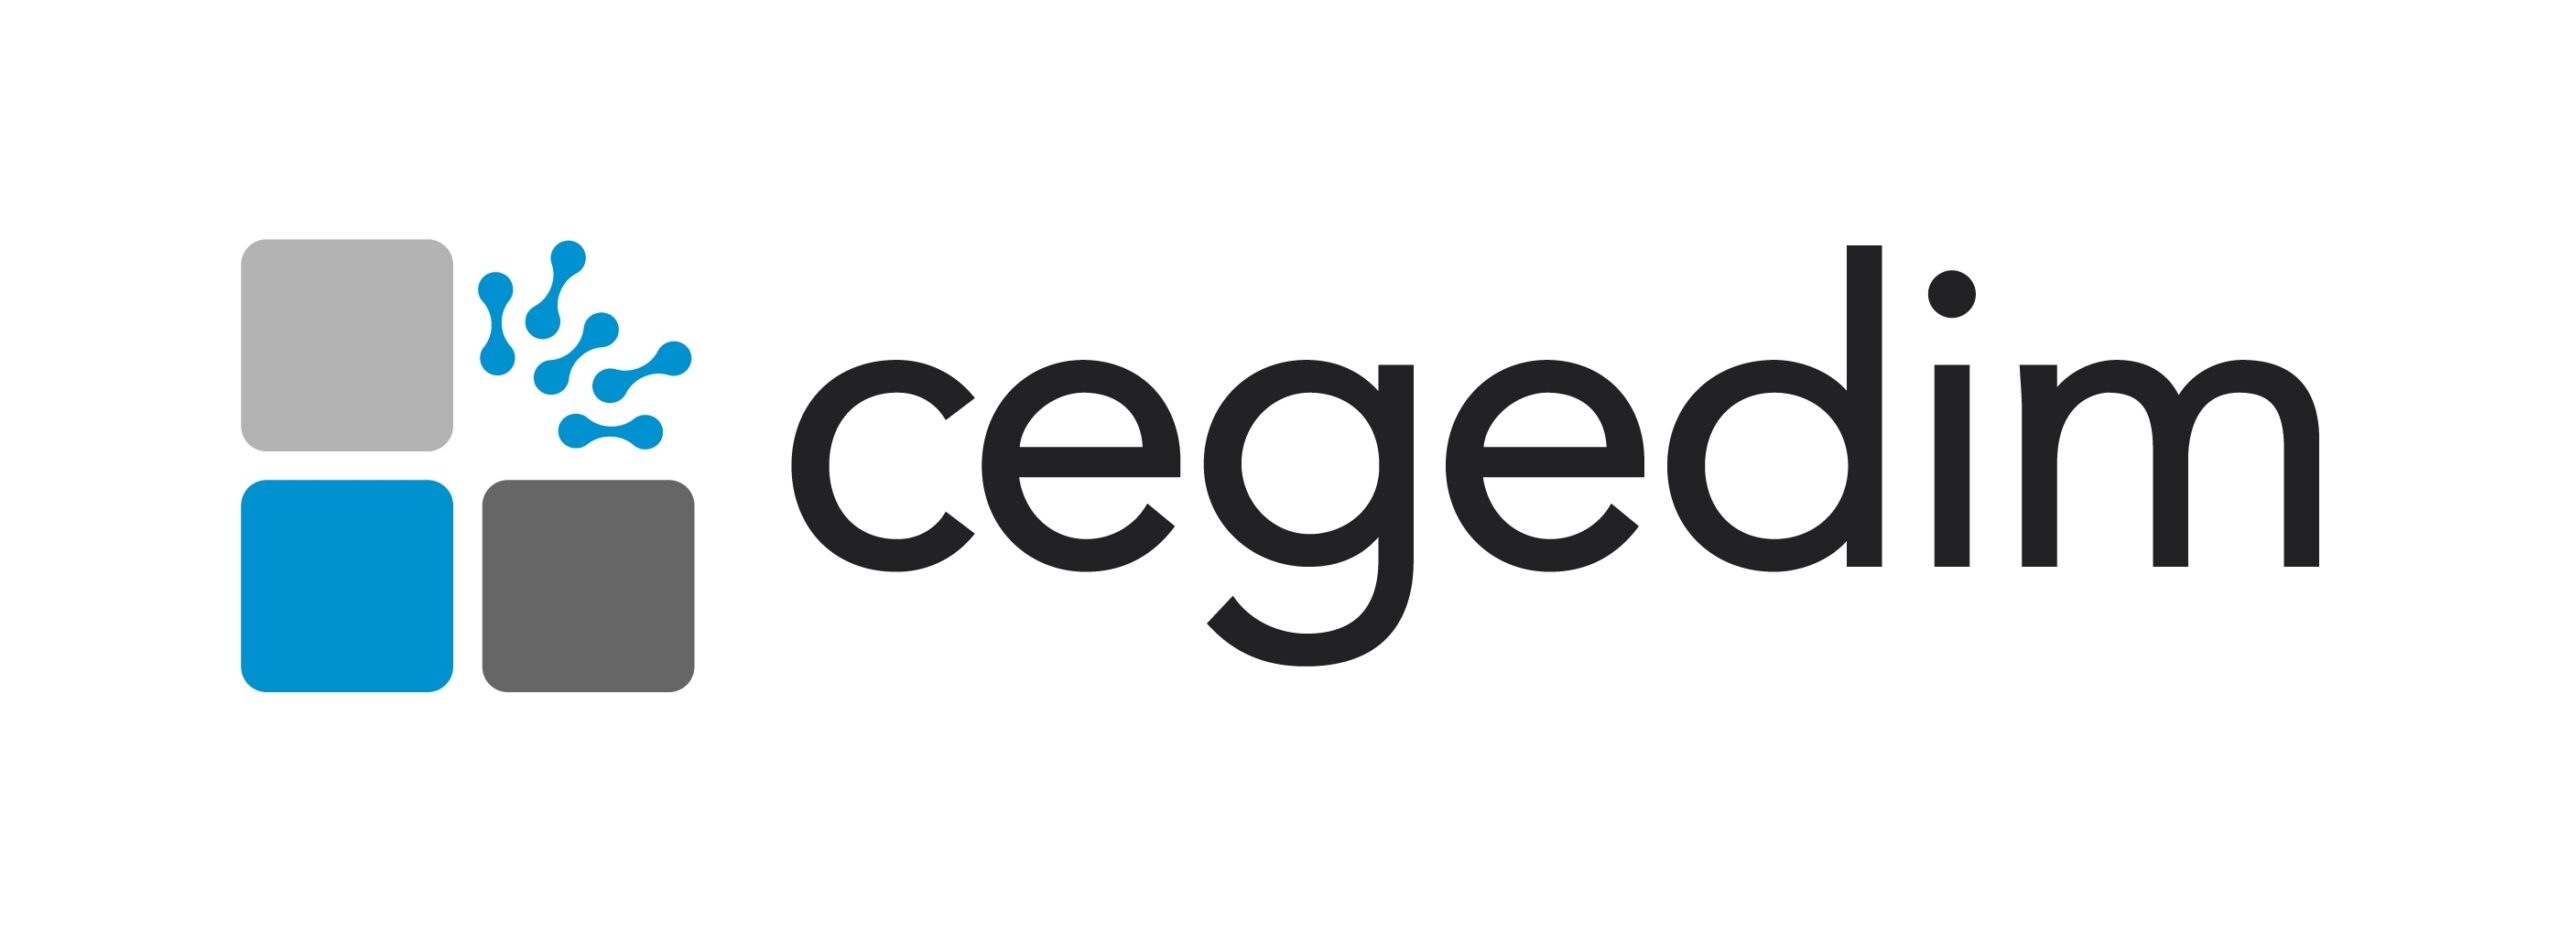 cegedim_logo2010_SCREEN